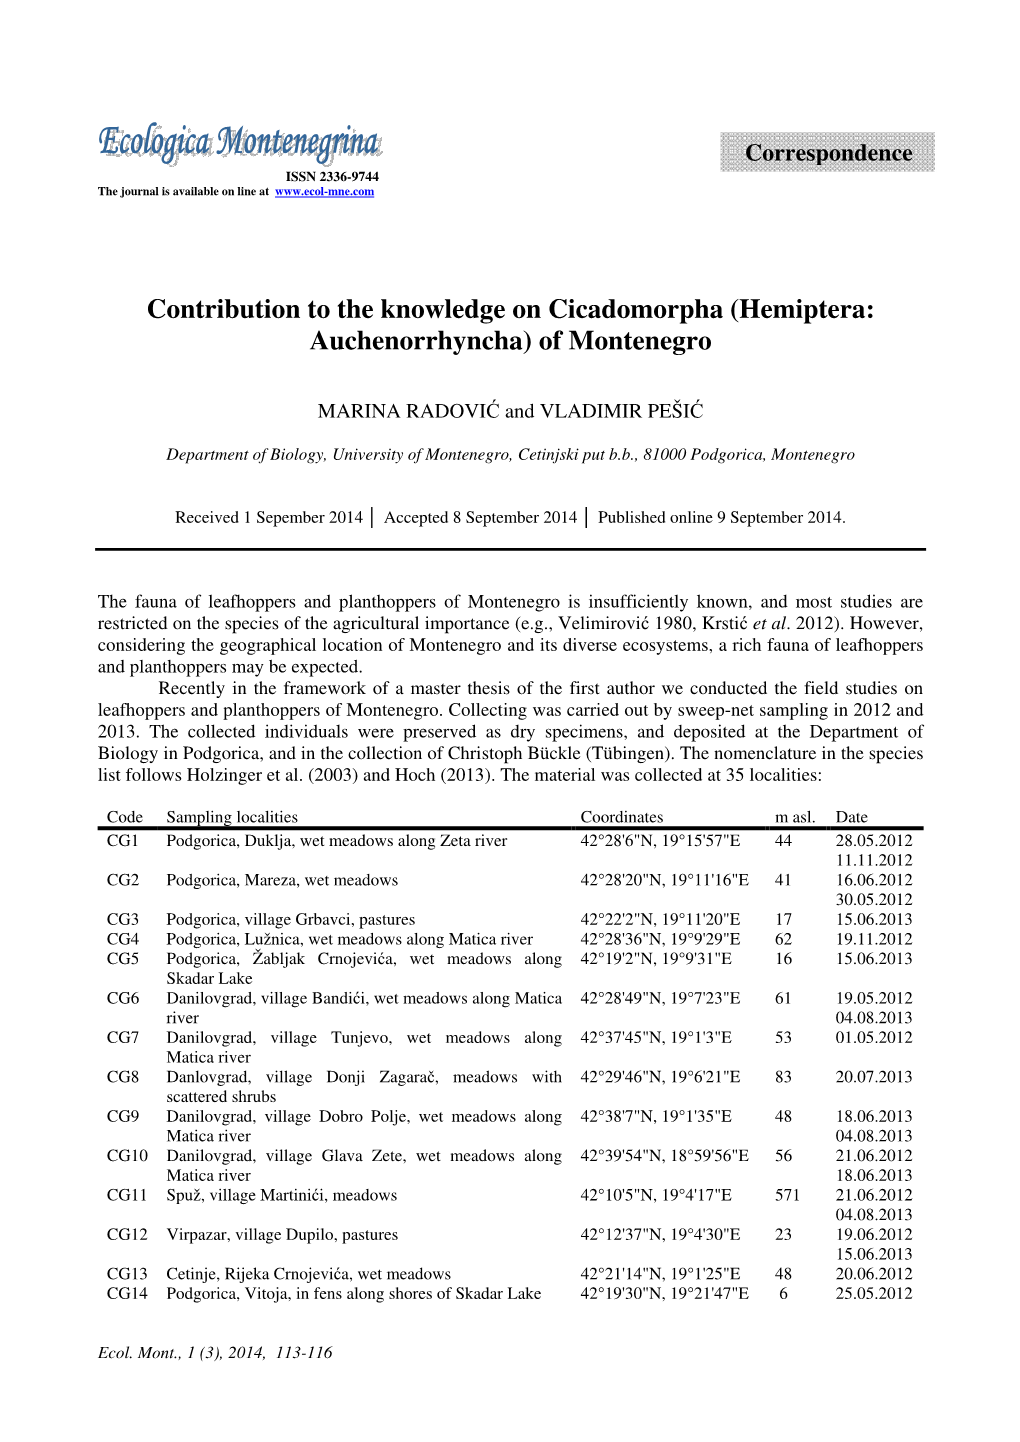 Contribution to the Knowledge on Cicadomorpha (Hemiptera: Auchenorrhyncha) of Montenegro